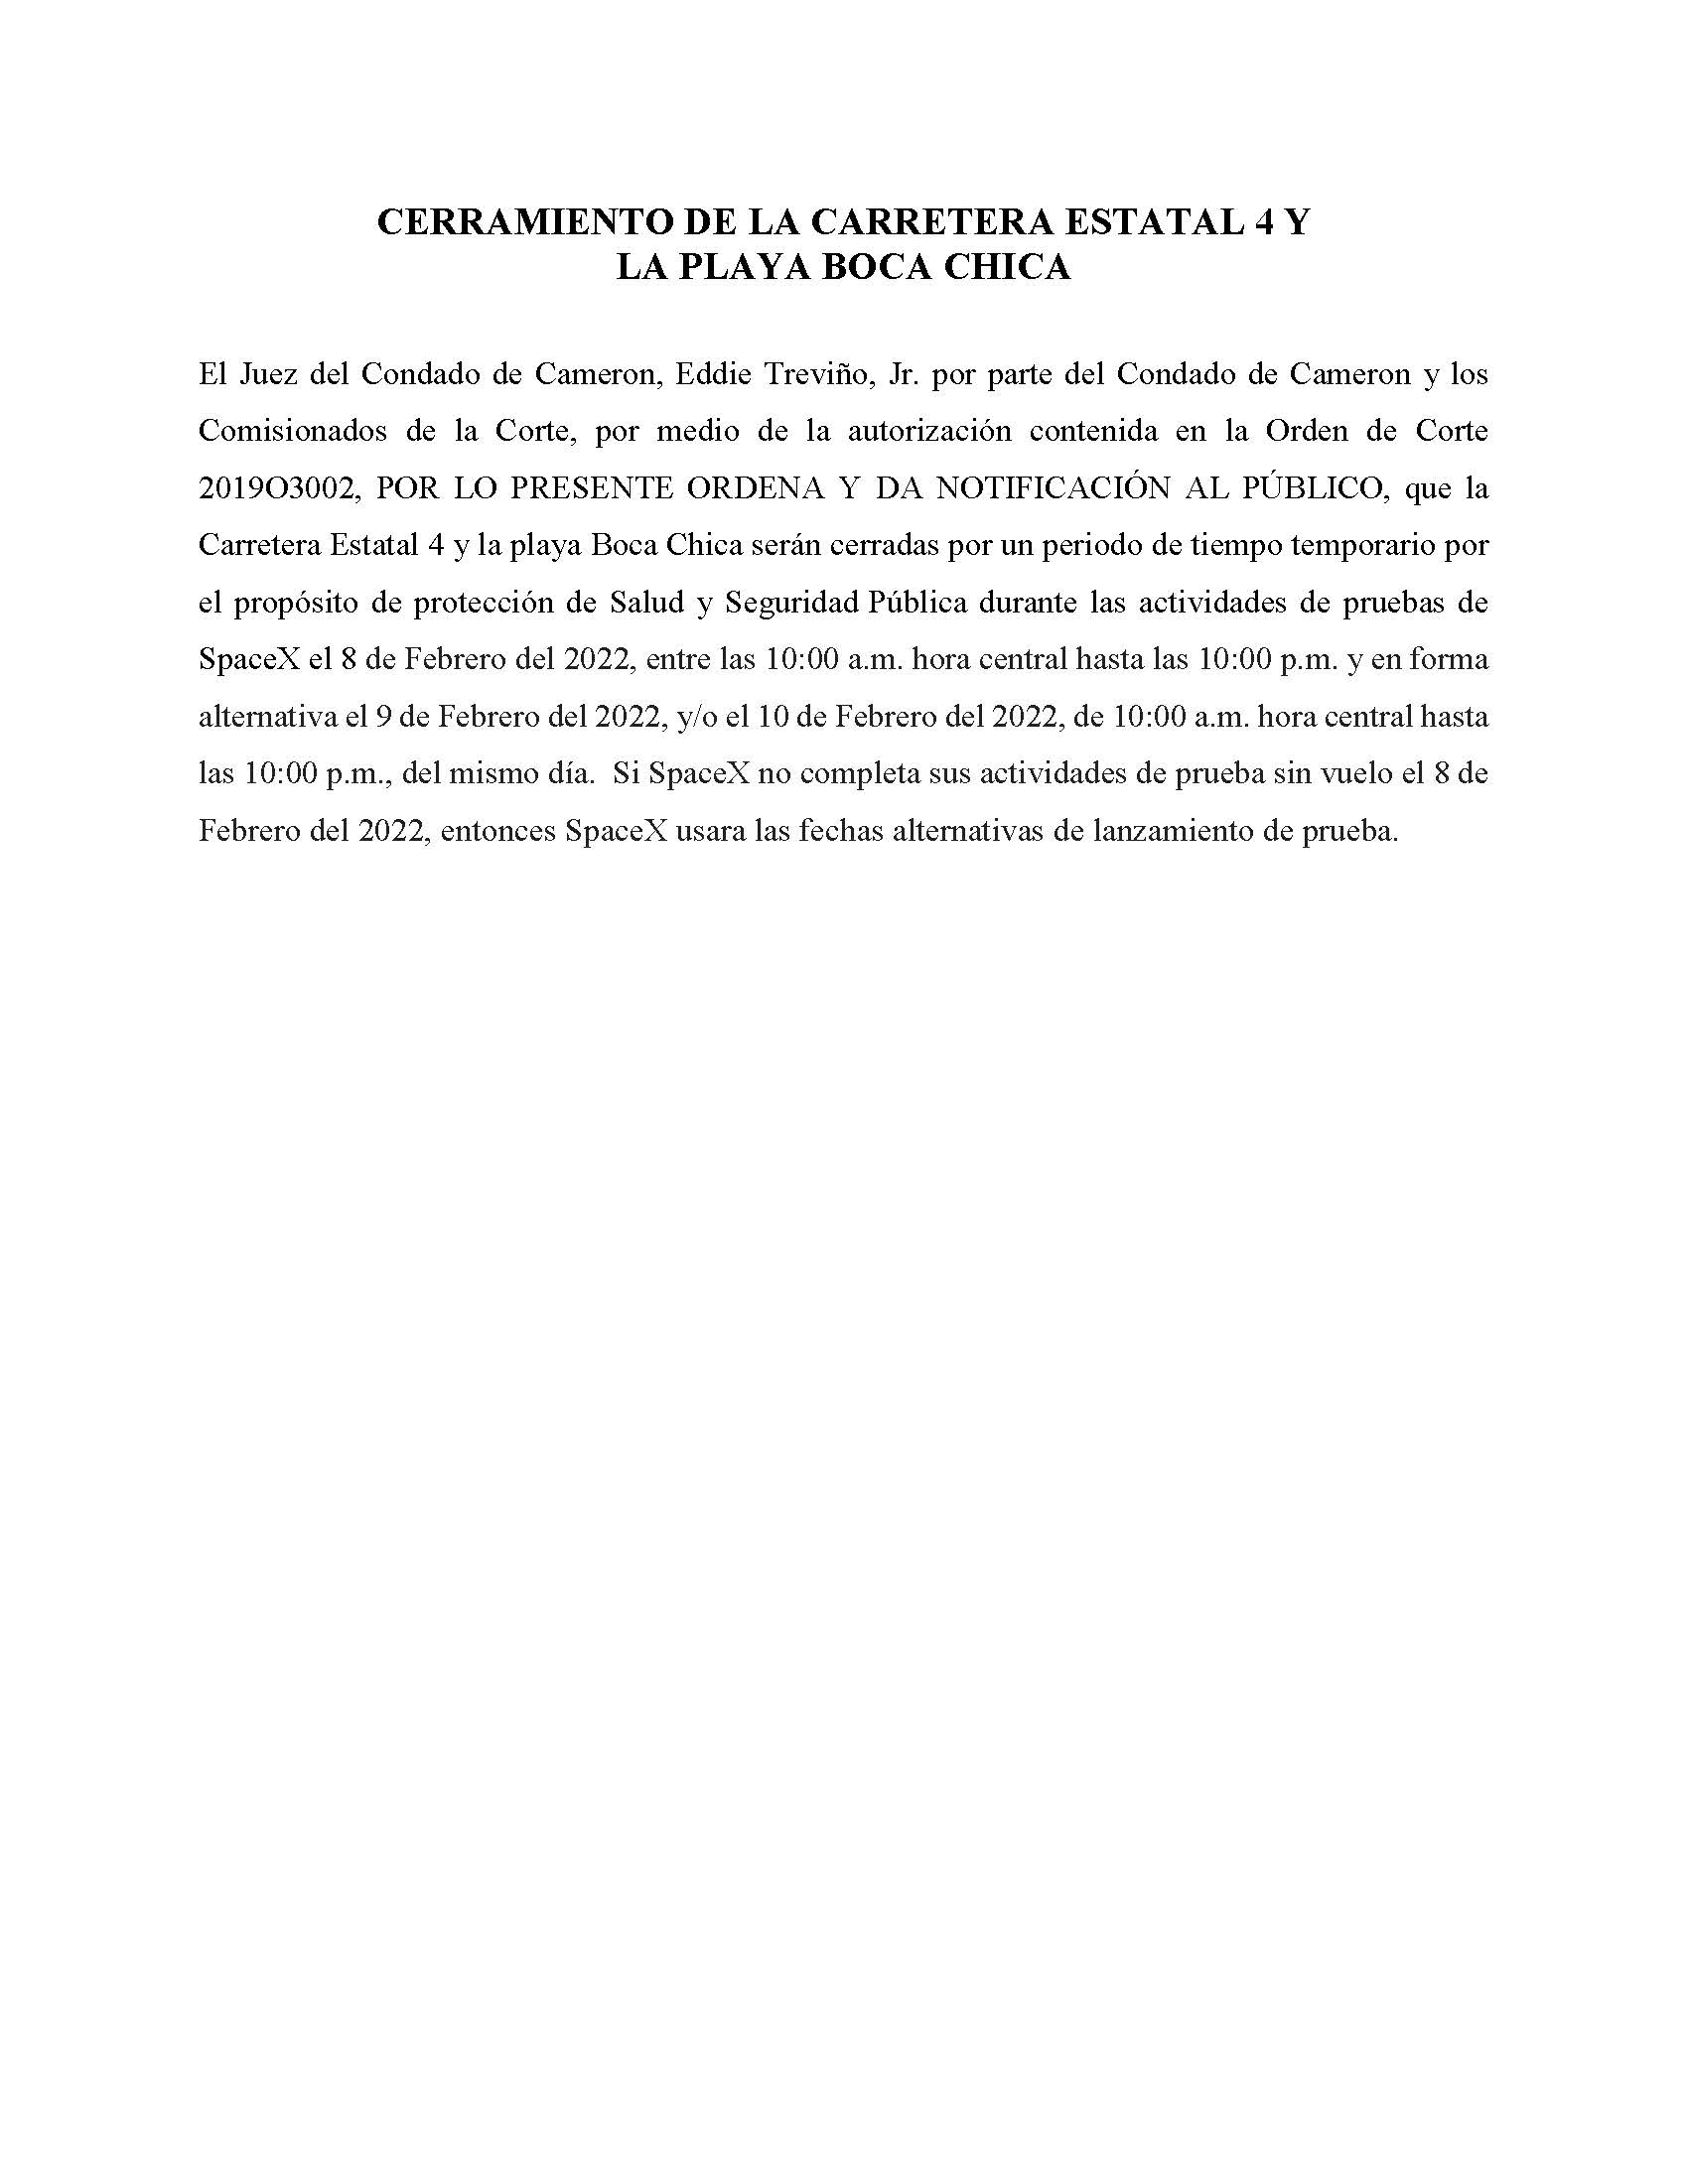 ORDER.CLOSURE OF HIGHWAY 4 Y LA PLAYA BOCA CHICA.SPANISH.02.08.2022